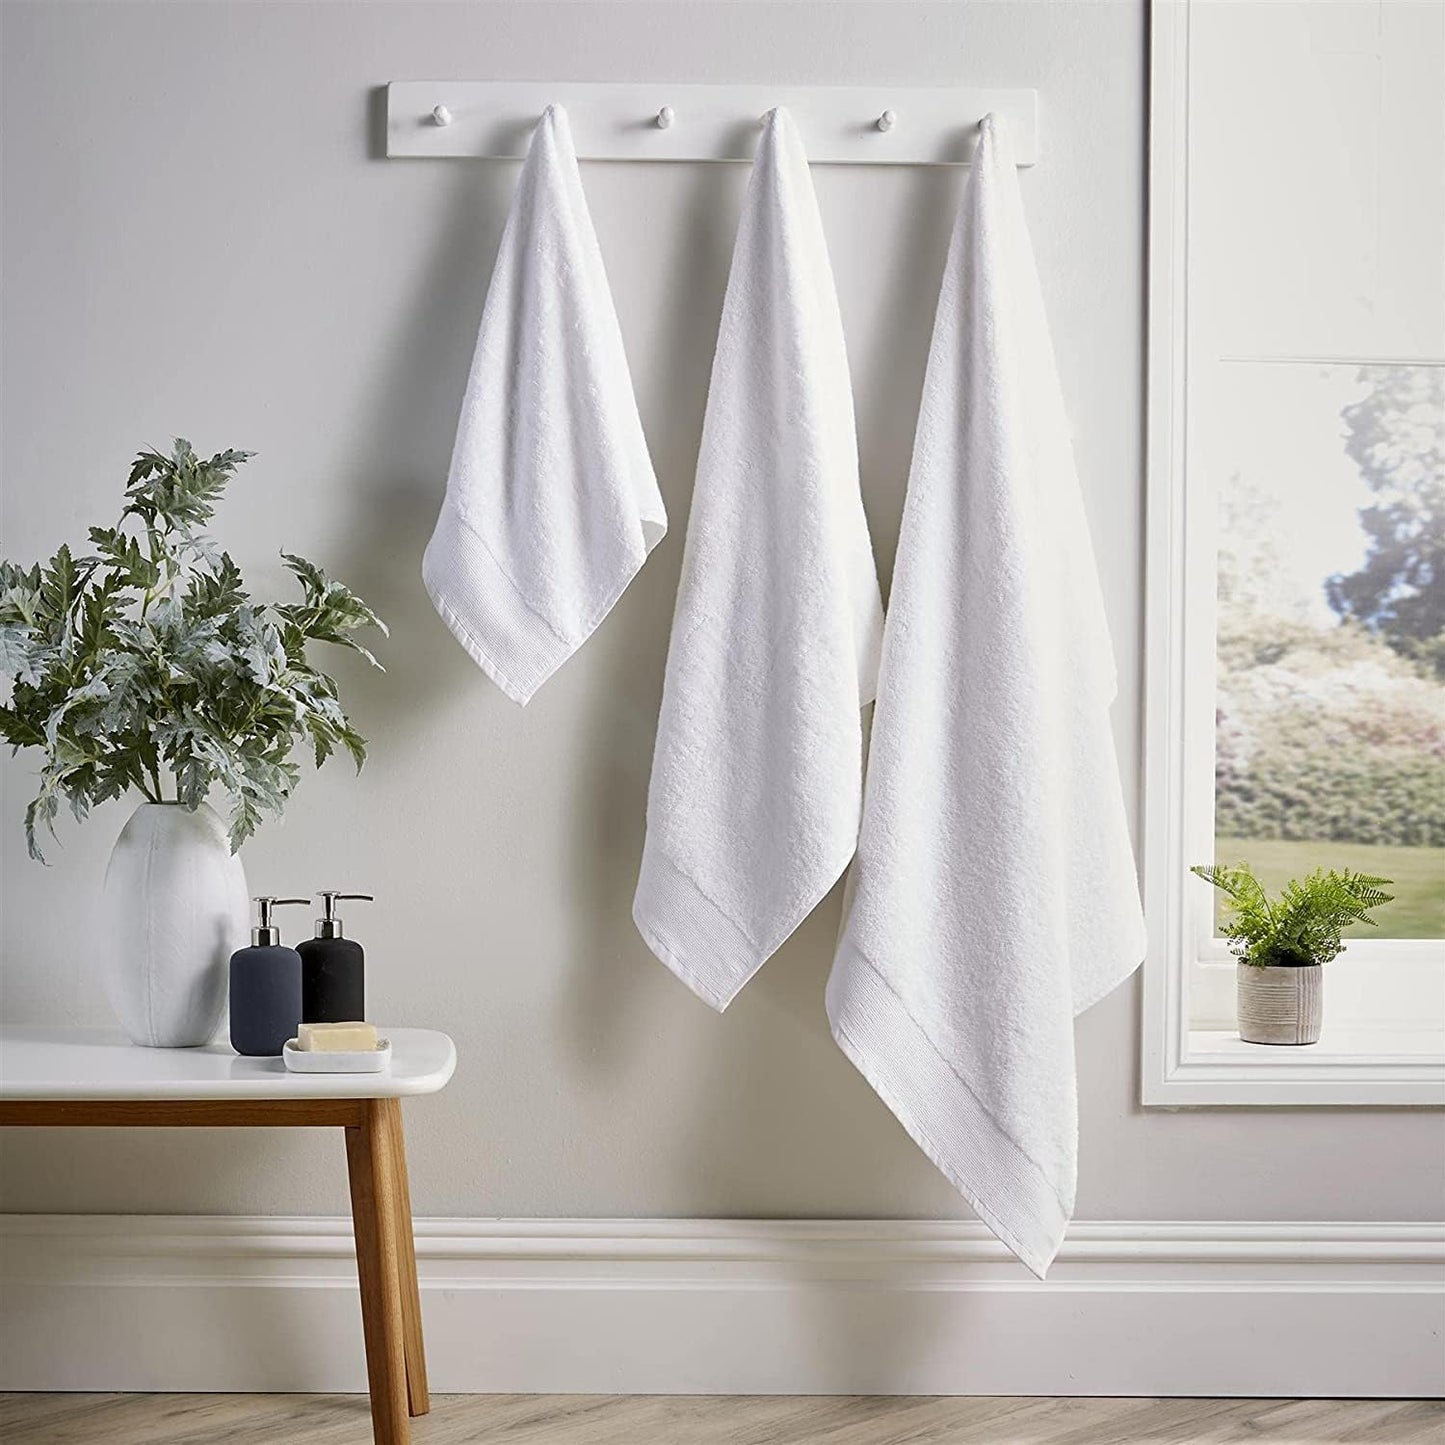 Bamboo Towels Bath Sheets Super Absorbent Bale Set Quick Dry Bath Towels Extra Soft 60% Bamboo 40% Cotton Bathroom Linen Hand Towel